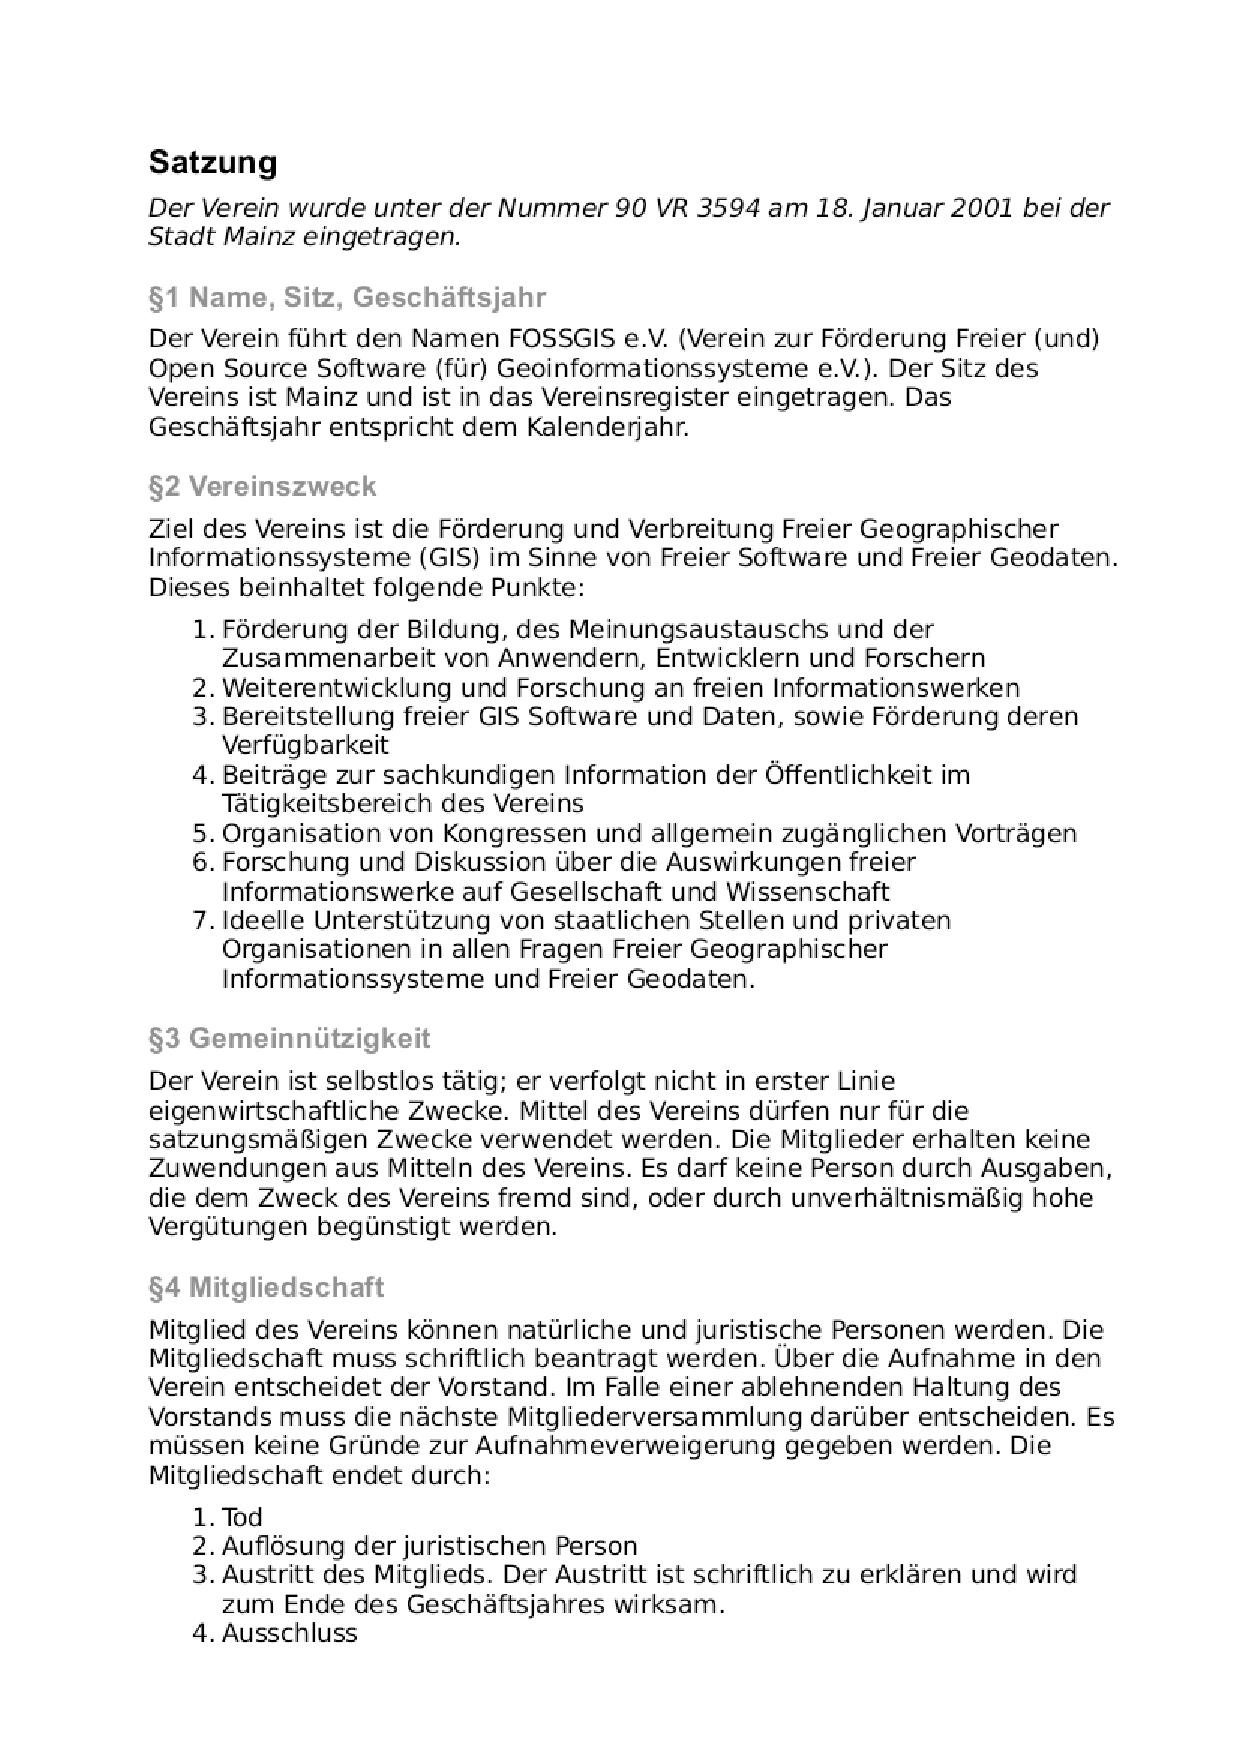 FOSSGIS Articles of Association DE.pdf